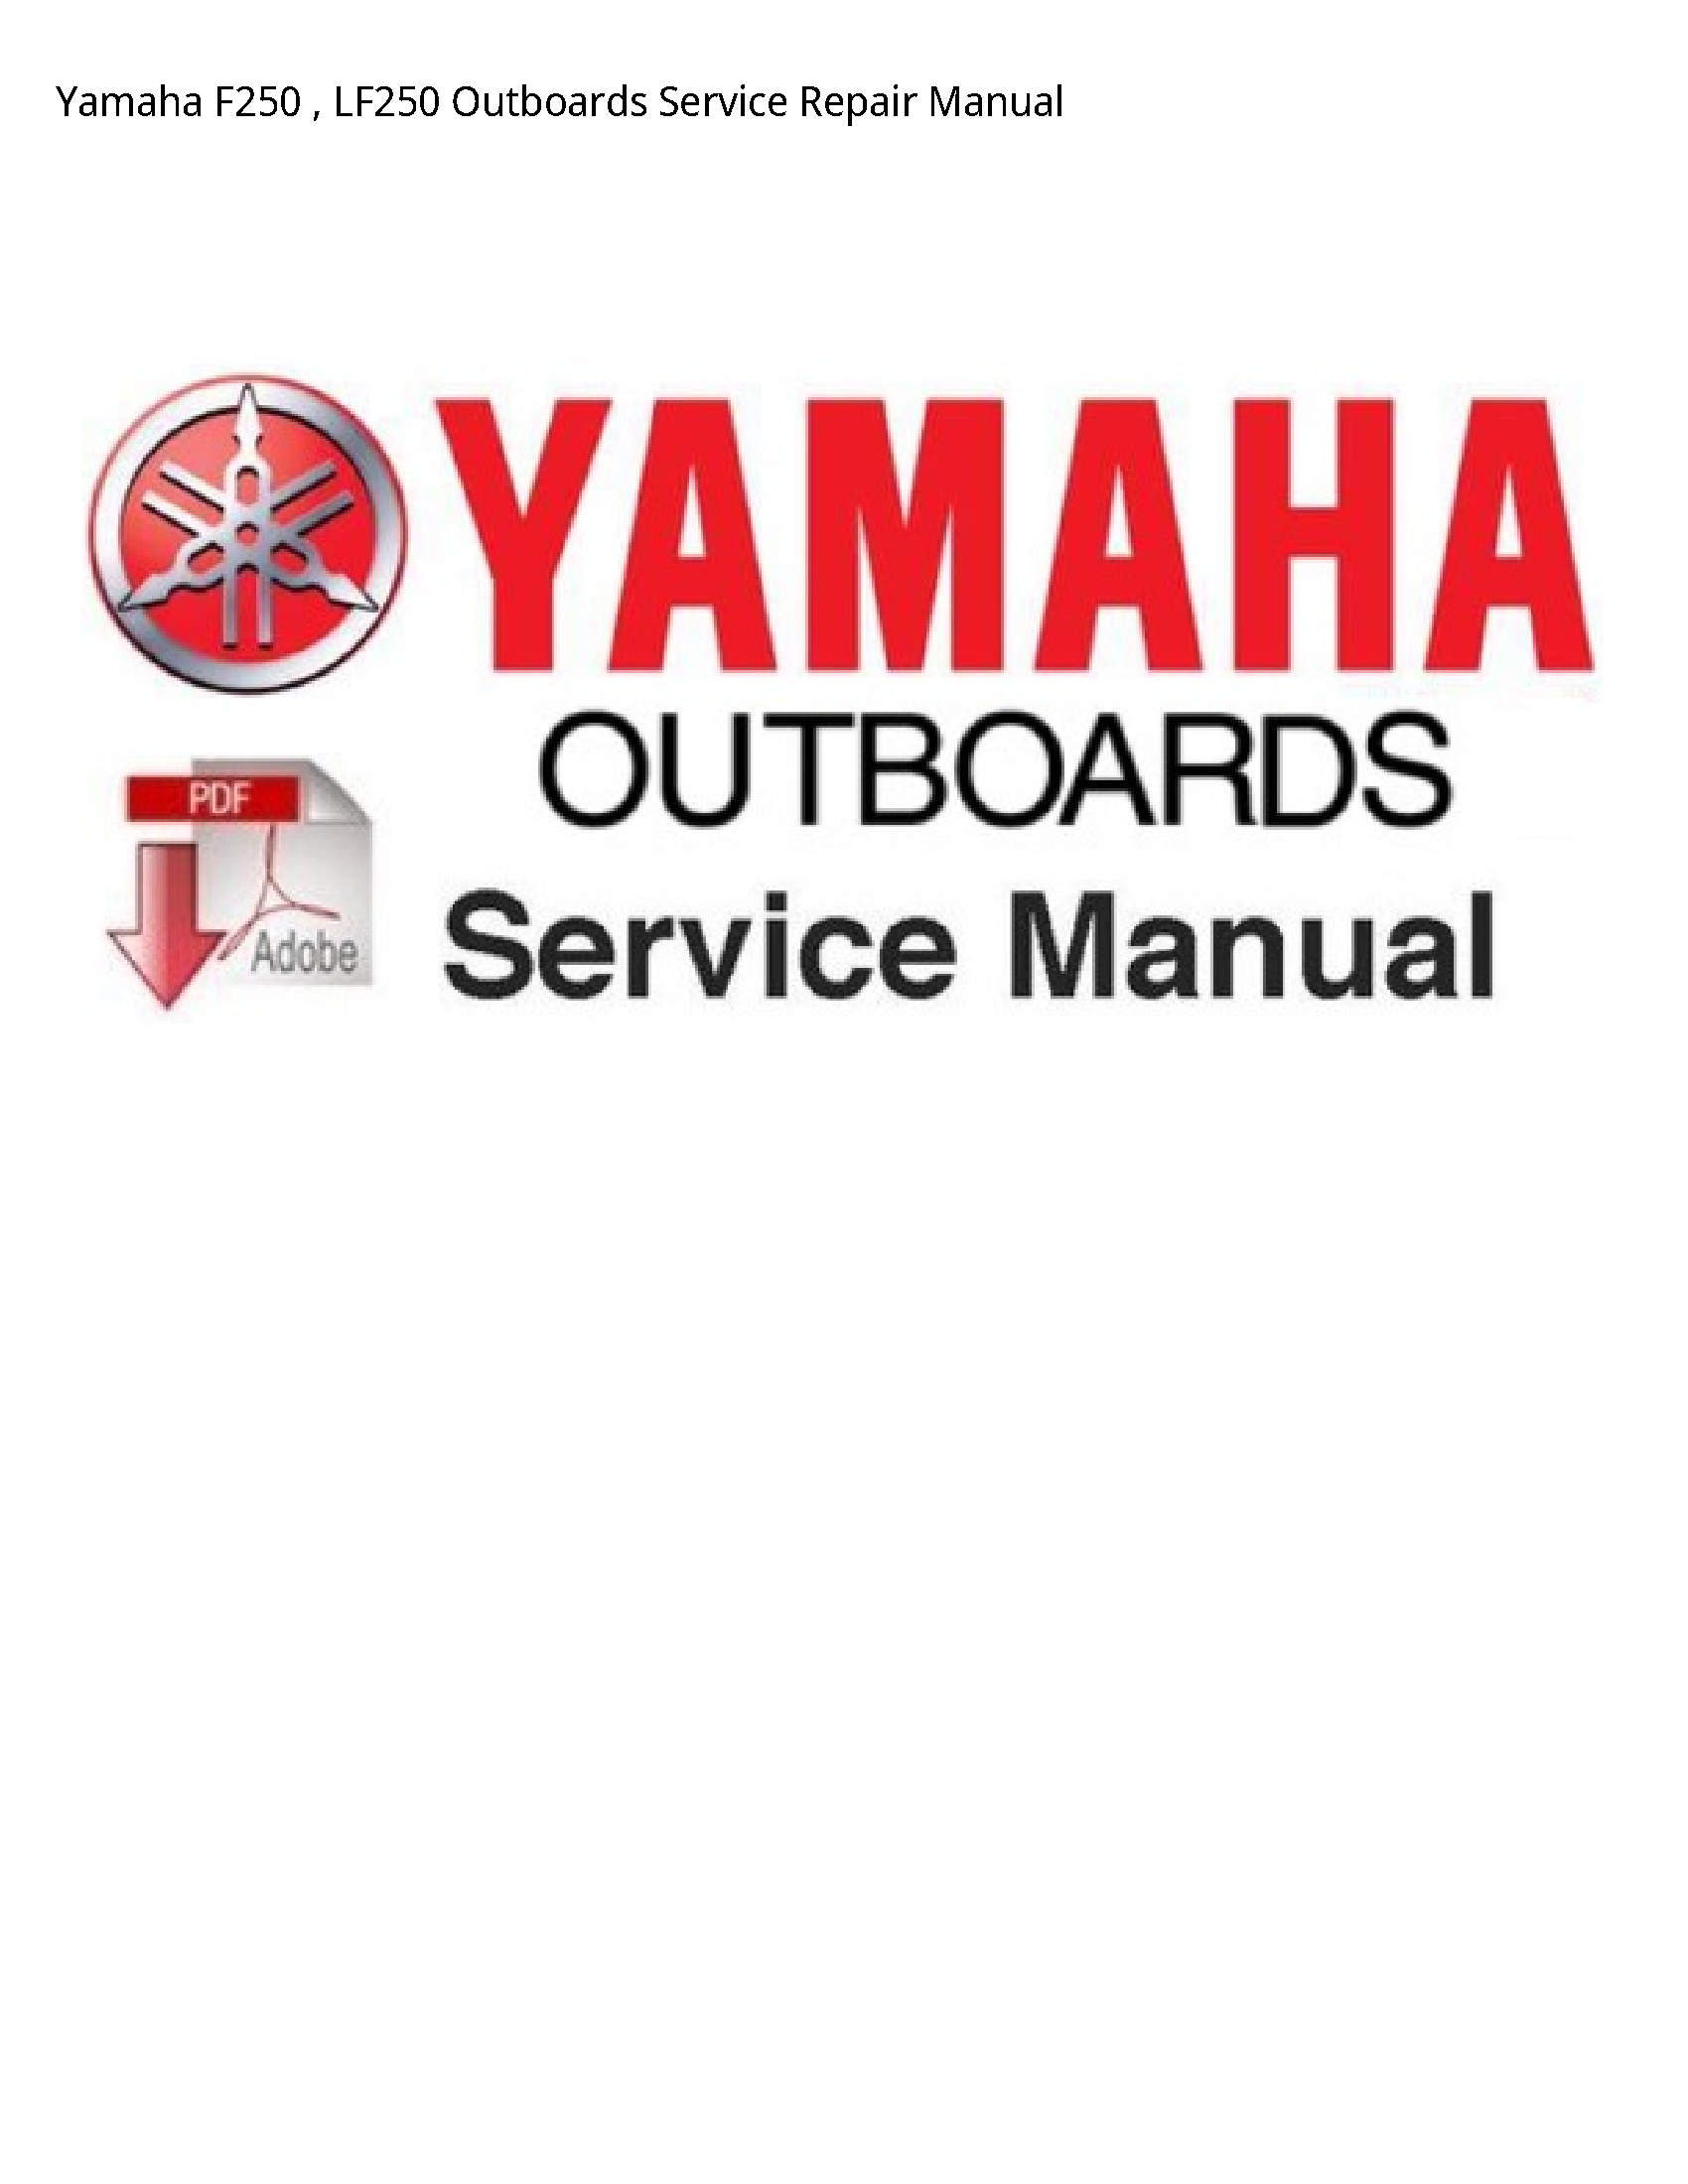 Yamaha F250 Outboards manual